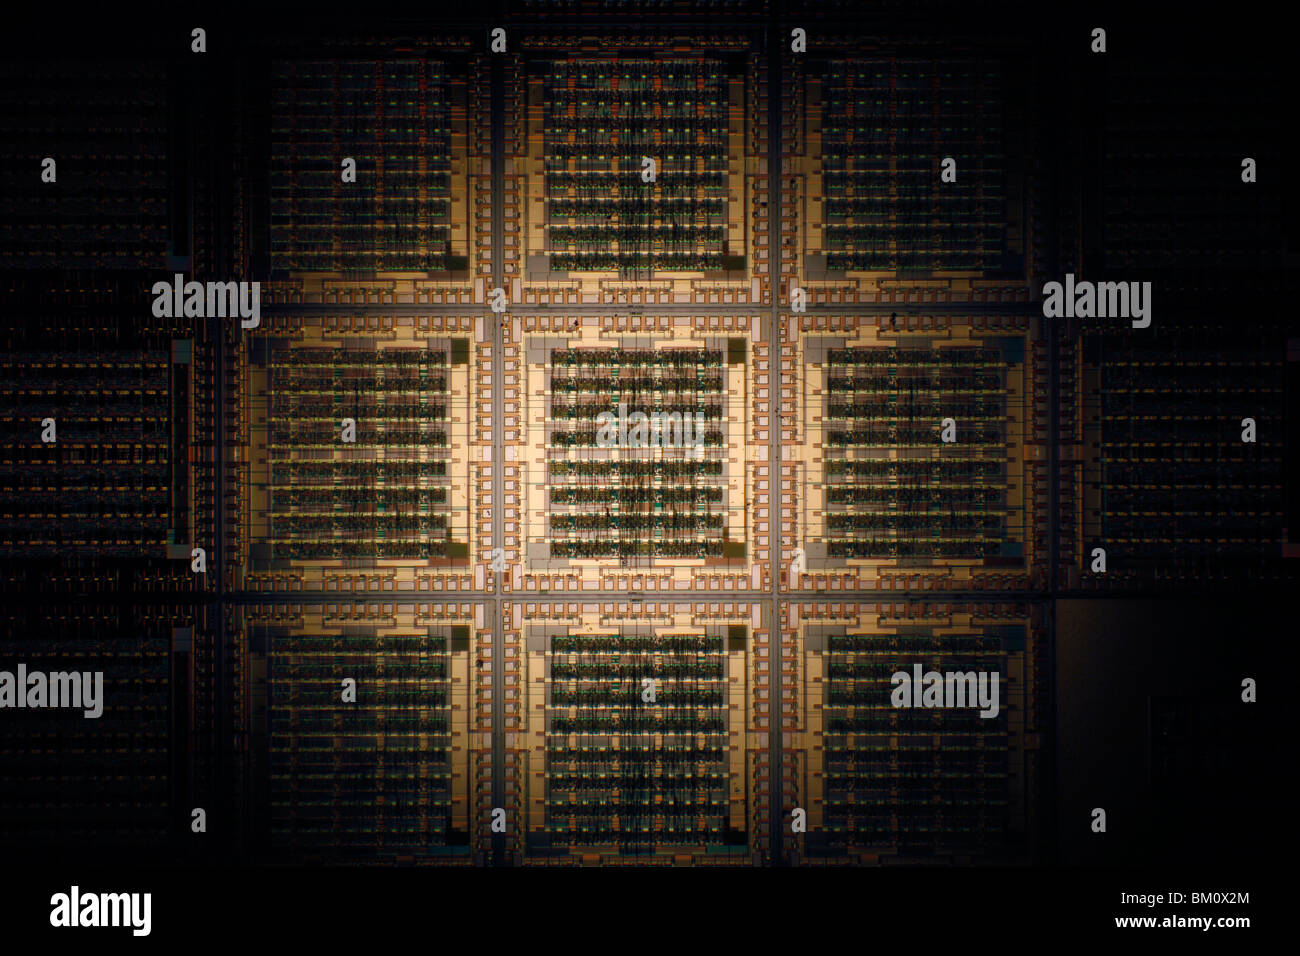 Oblea de silicio detalle mostrando circuitos impresos Foto de stock